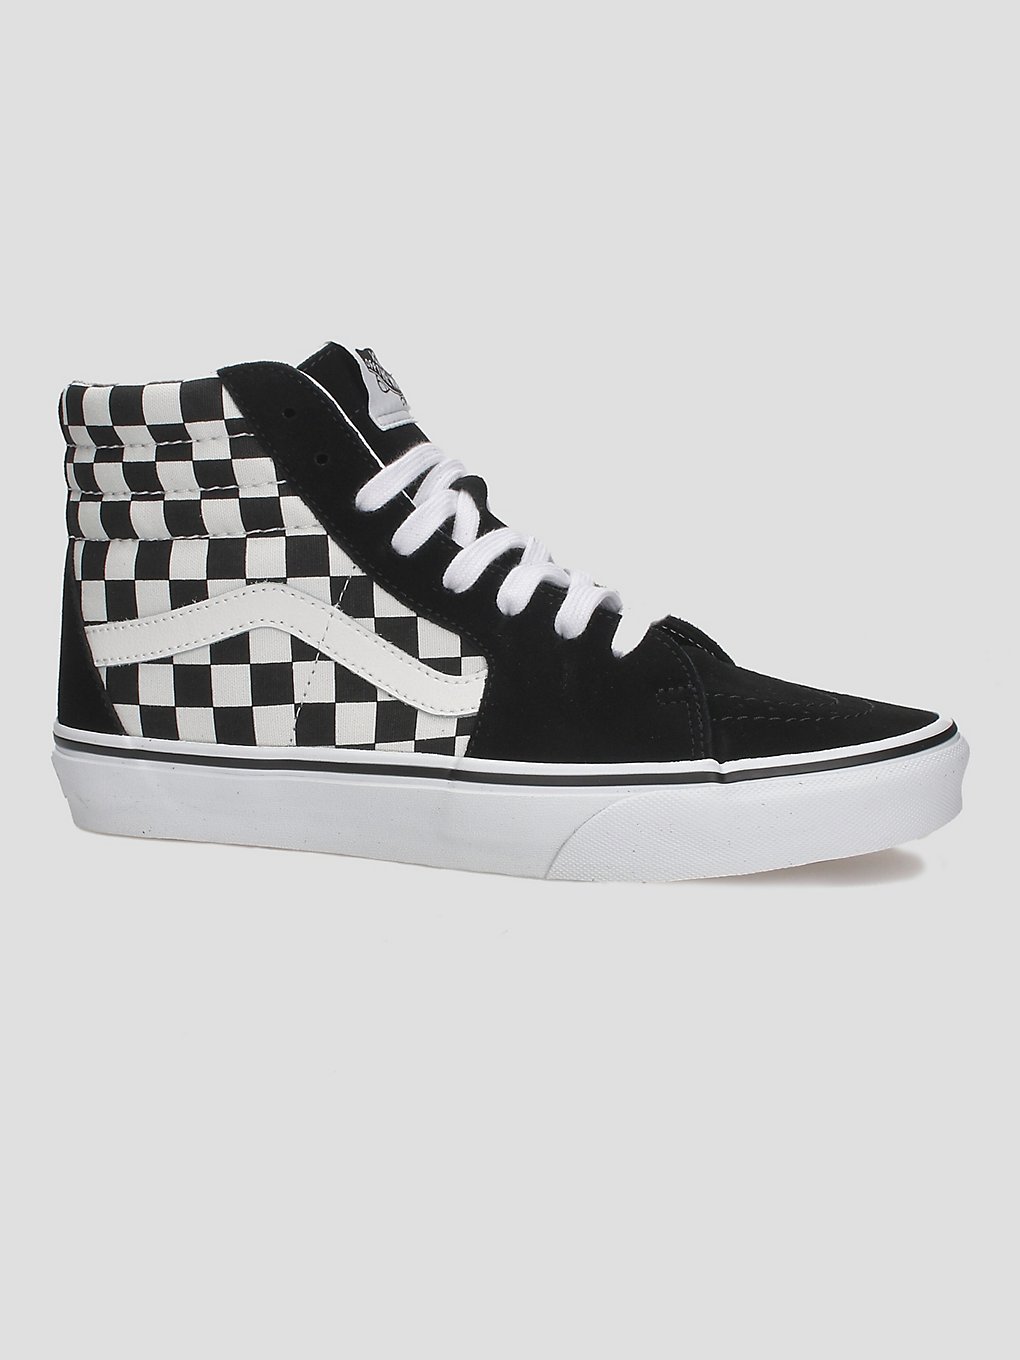 Vans Checkerboard Sk8-Hi Skateschuhe tr white kaufen